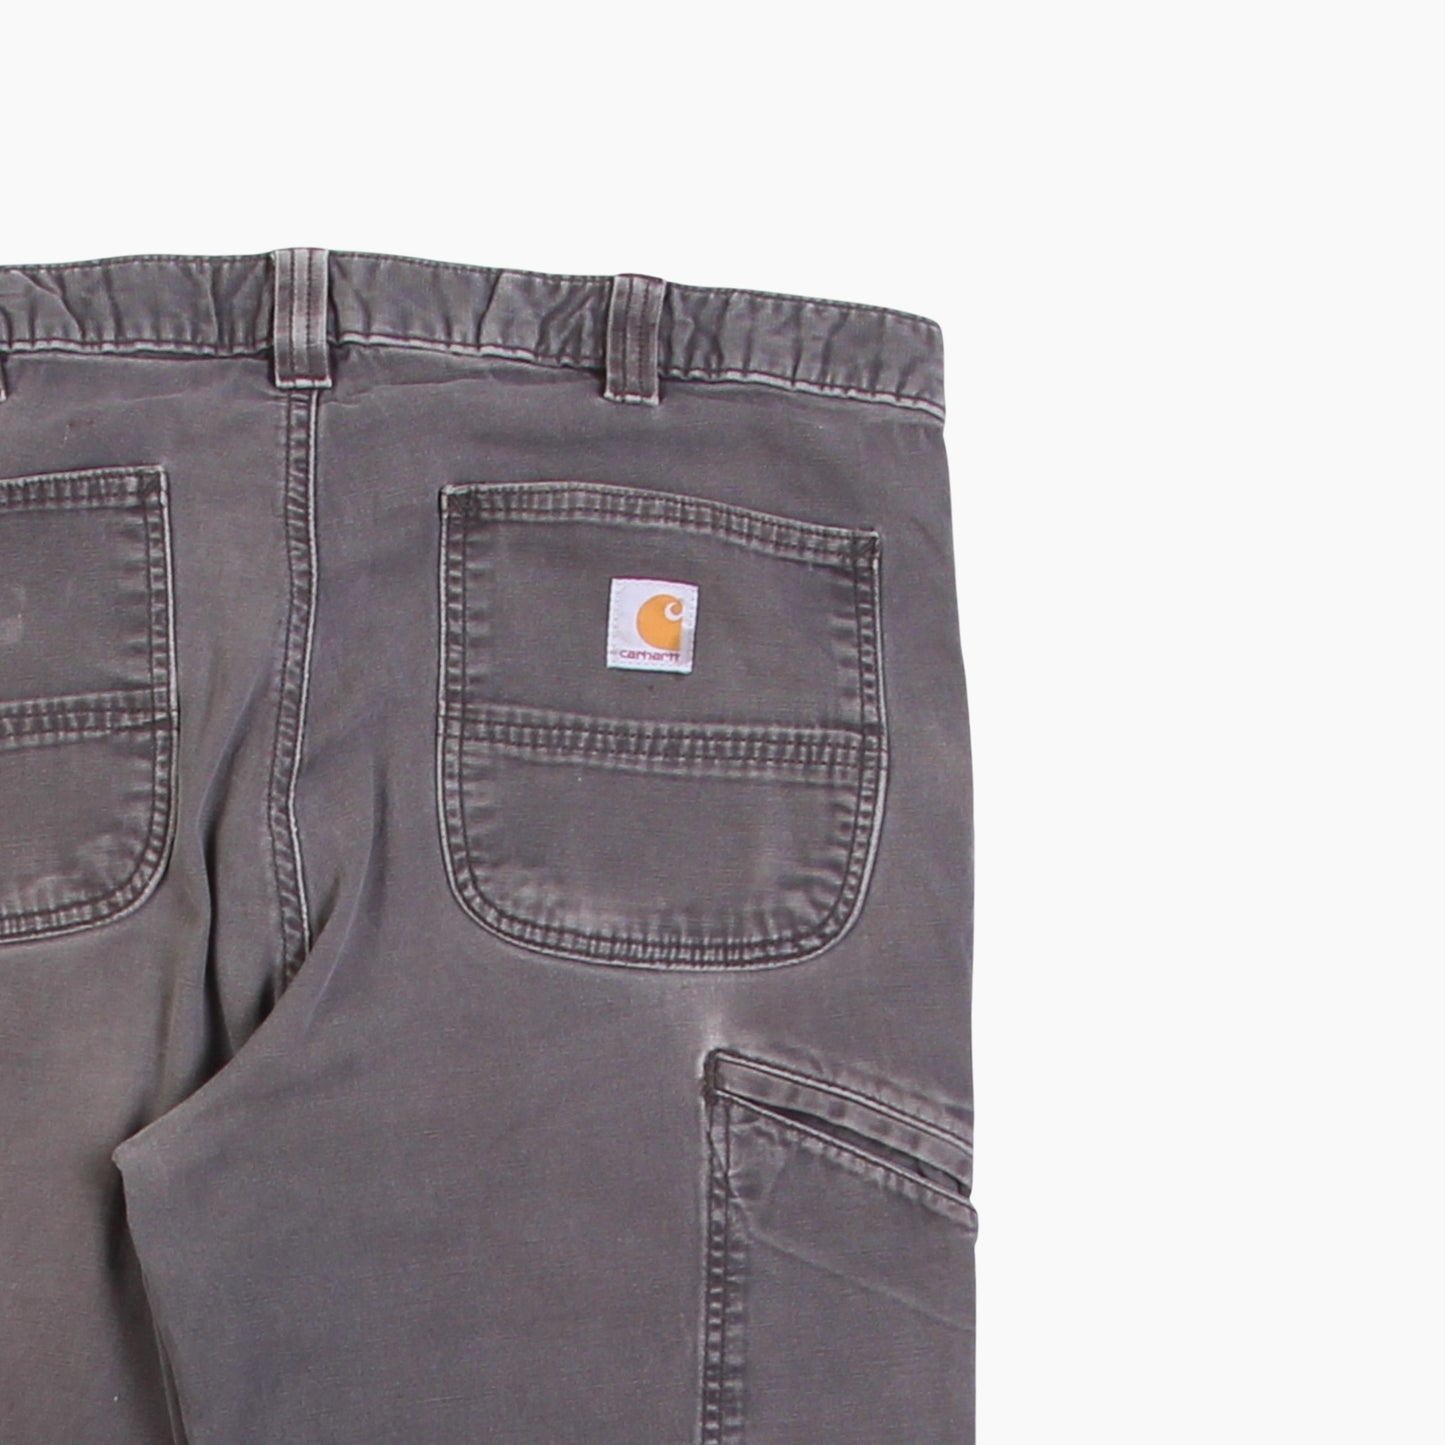 Vintage Carpenter Pants - Grey - 36/32 - American Madness